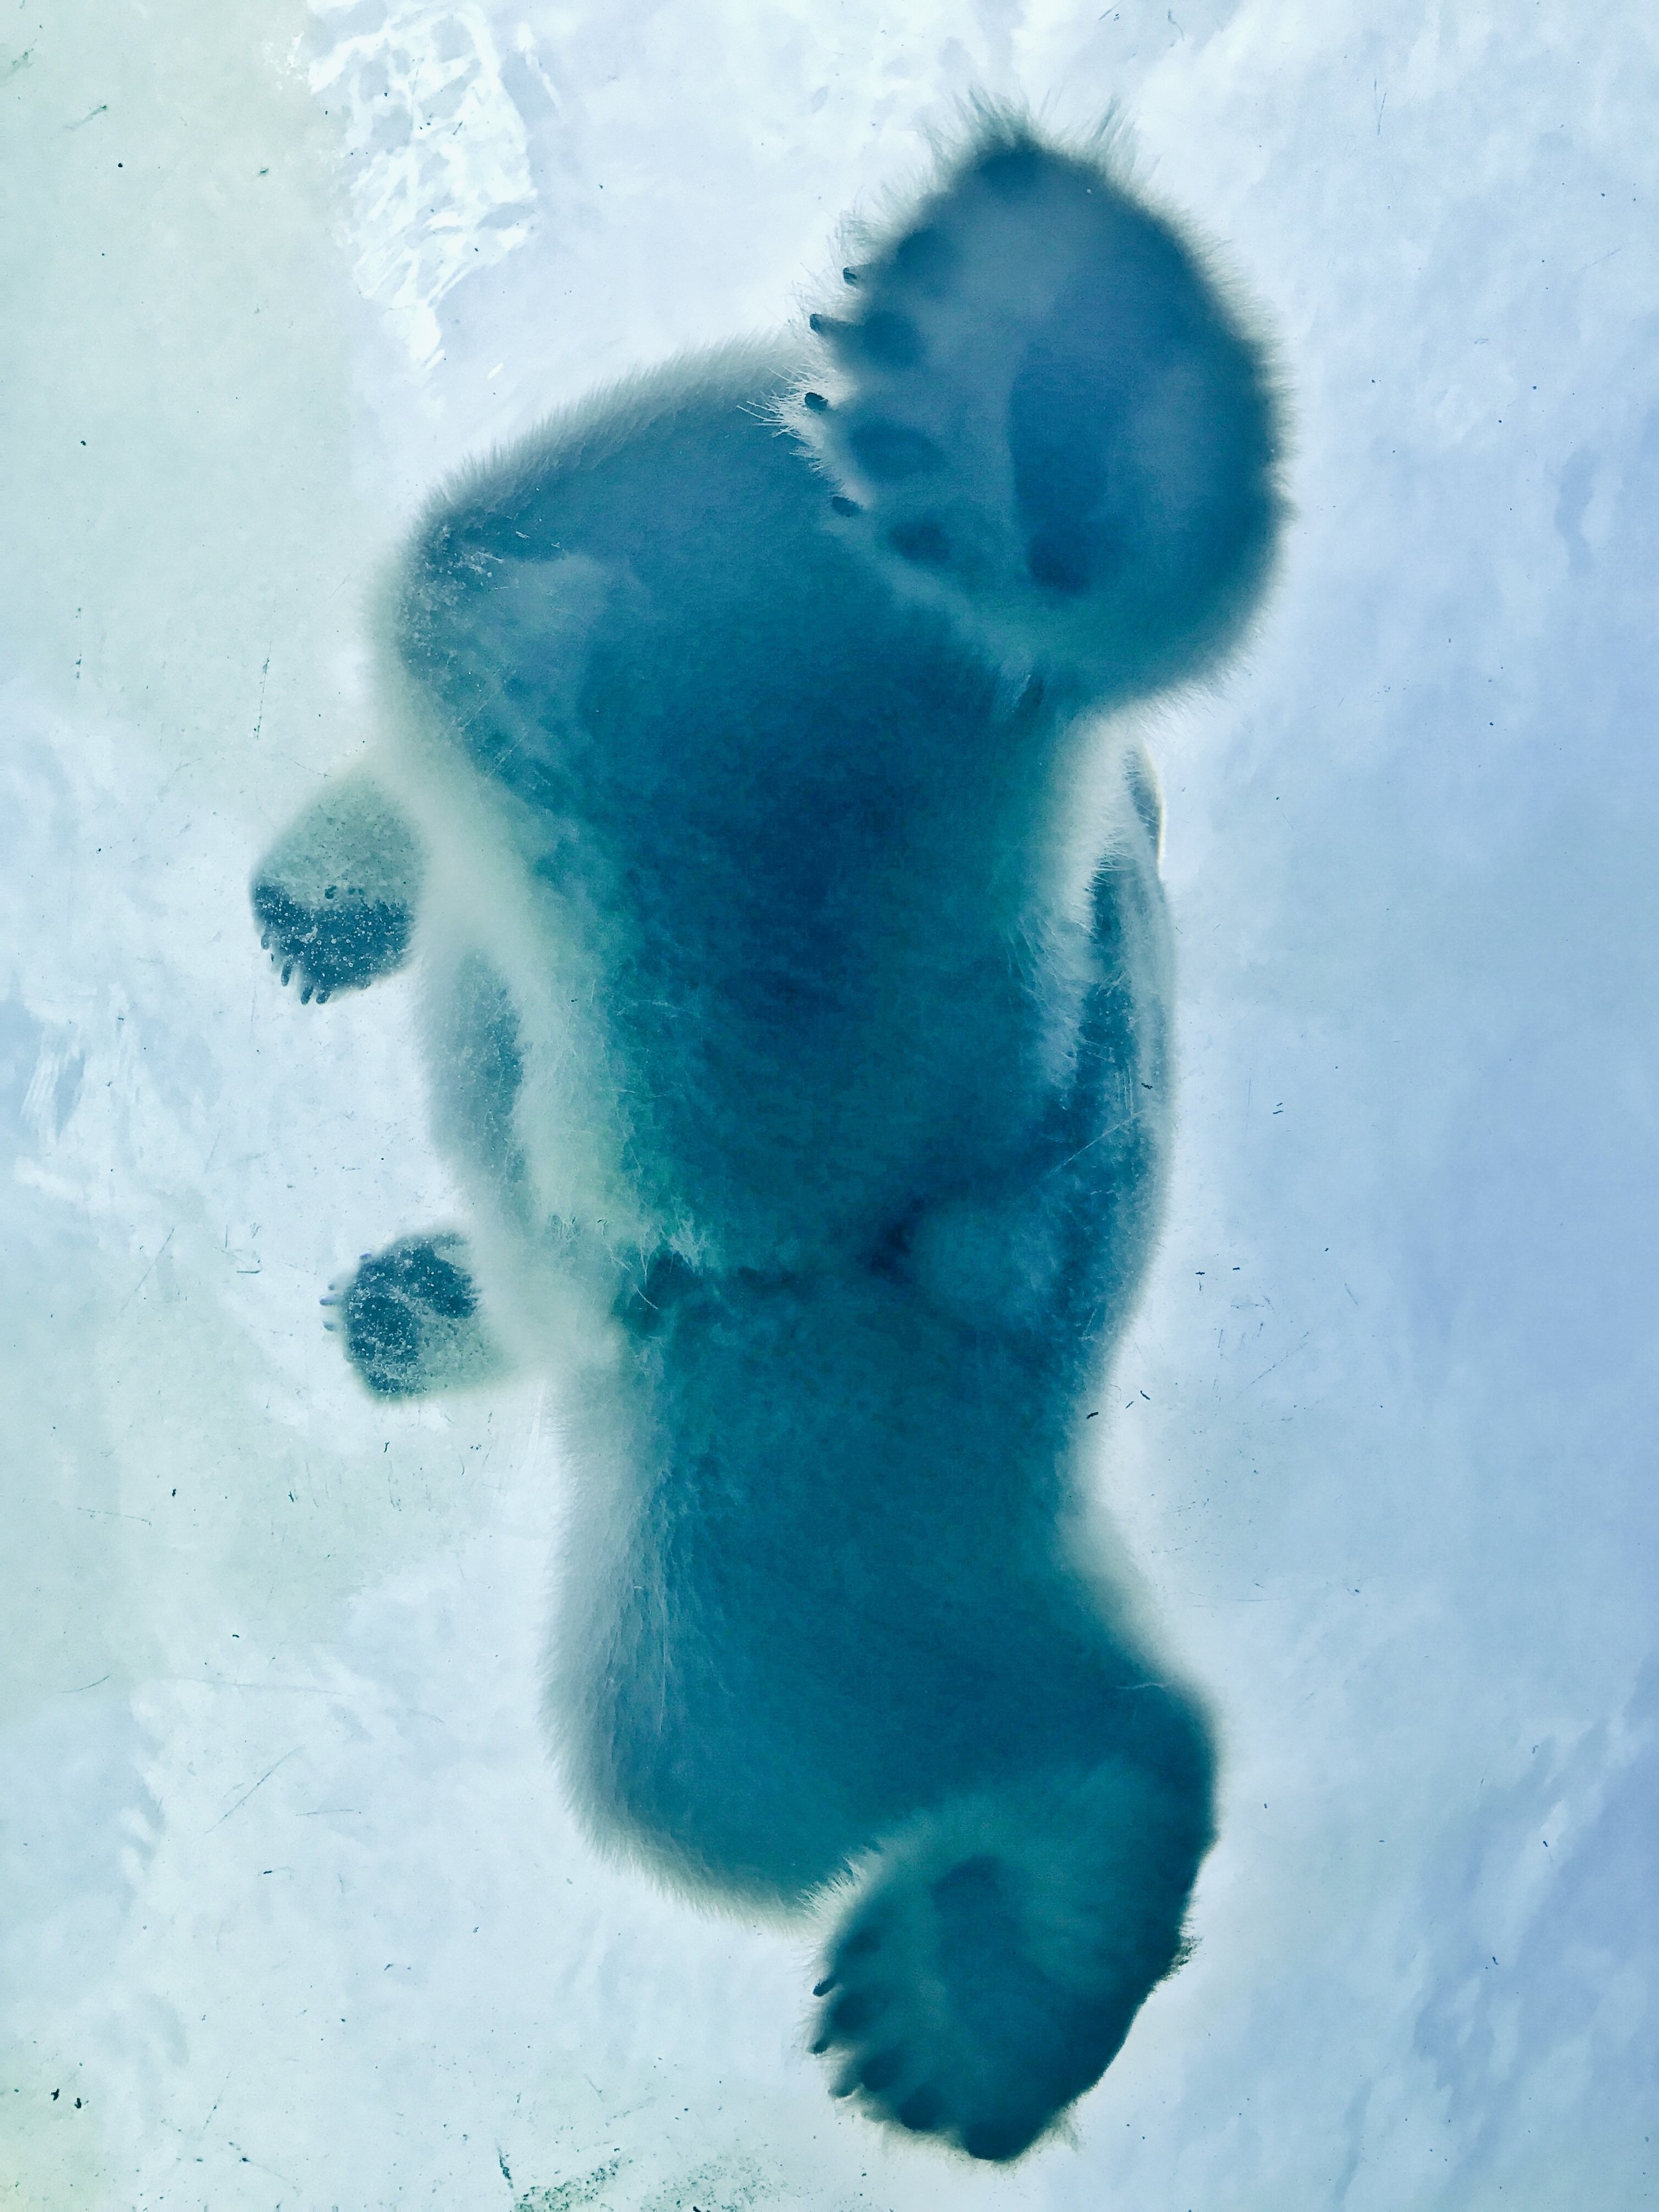 carlos-breton Polar Bear under the Ice Arctic Up cL.jpg